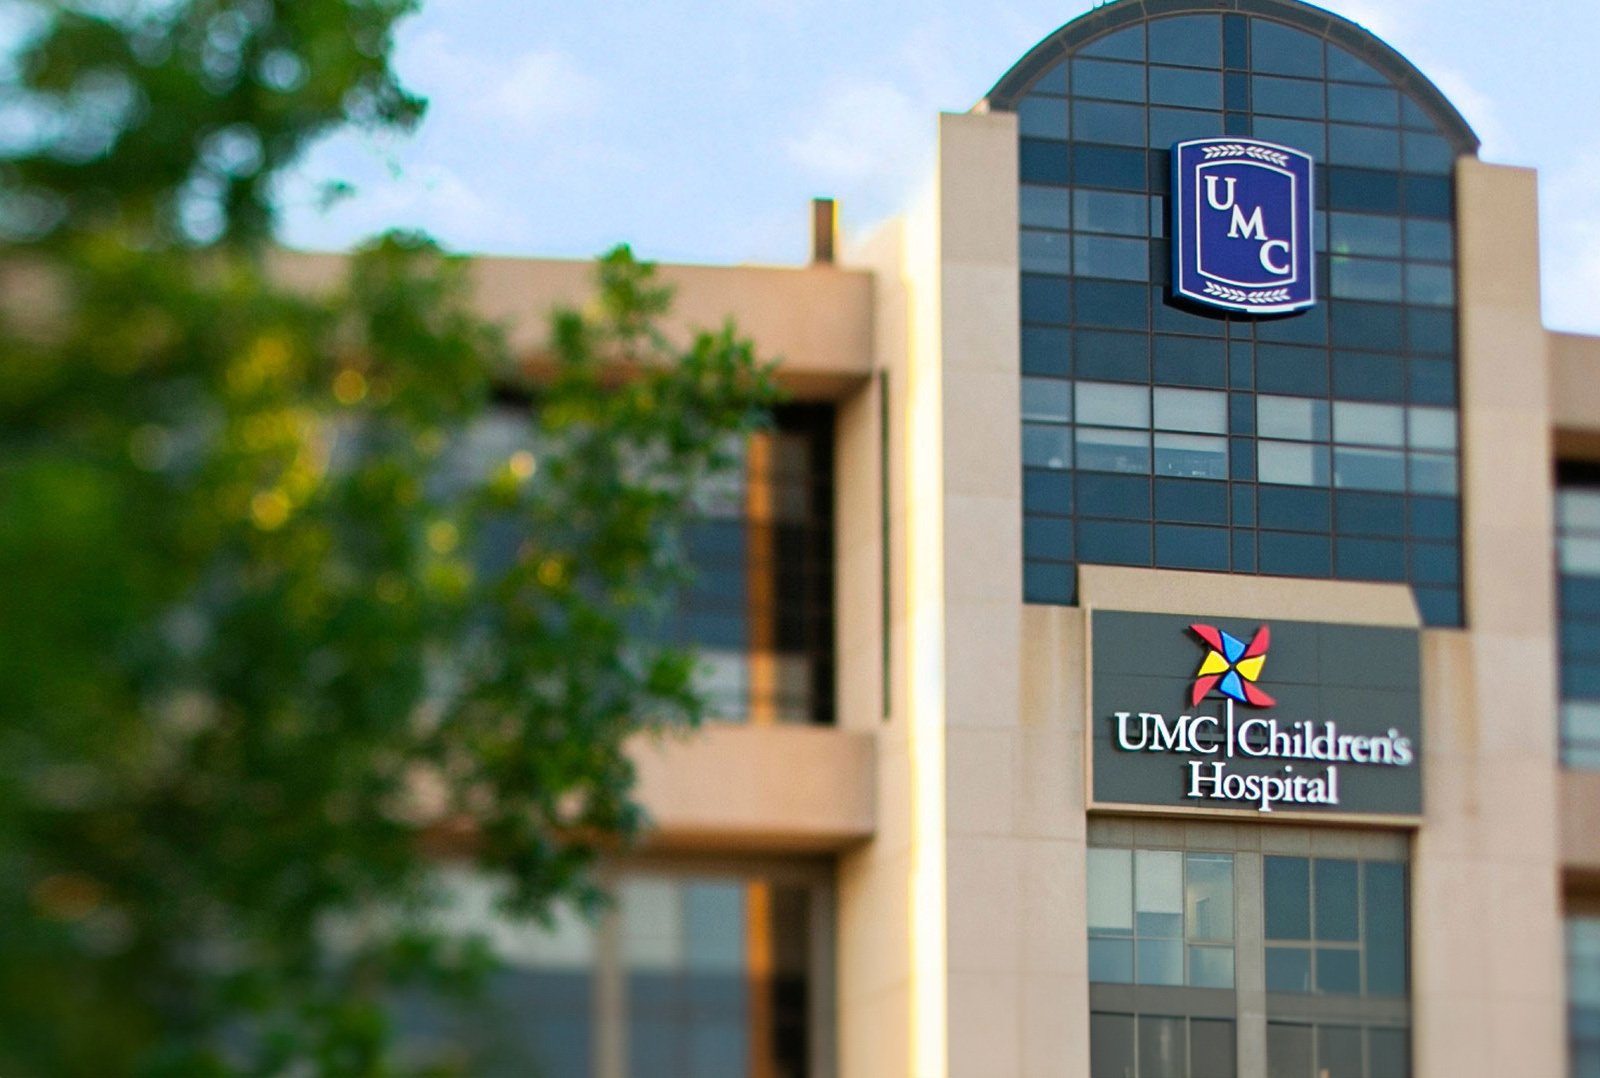 UMC childrens hospital location.